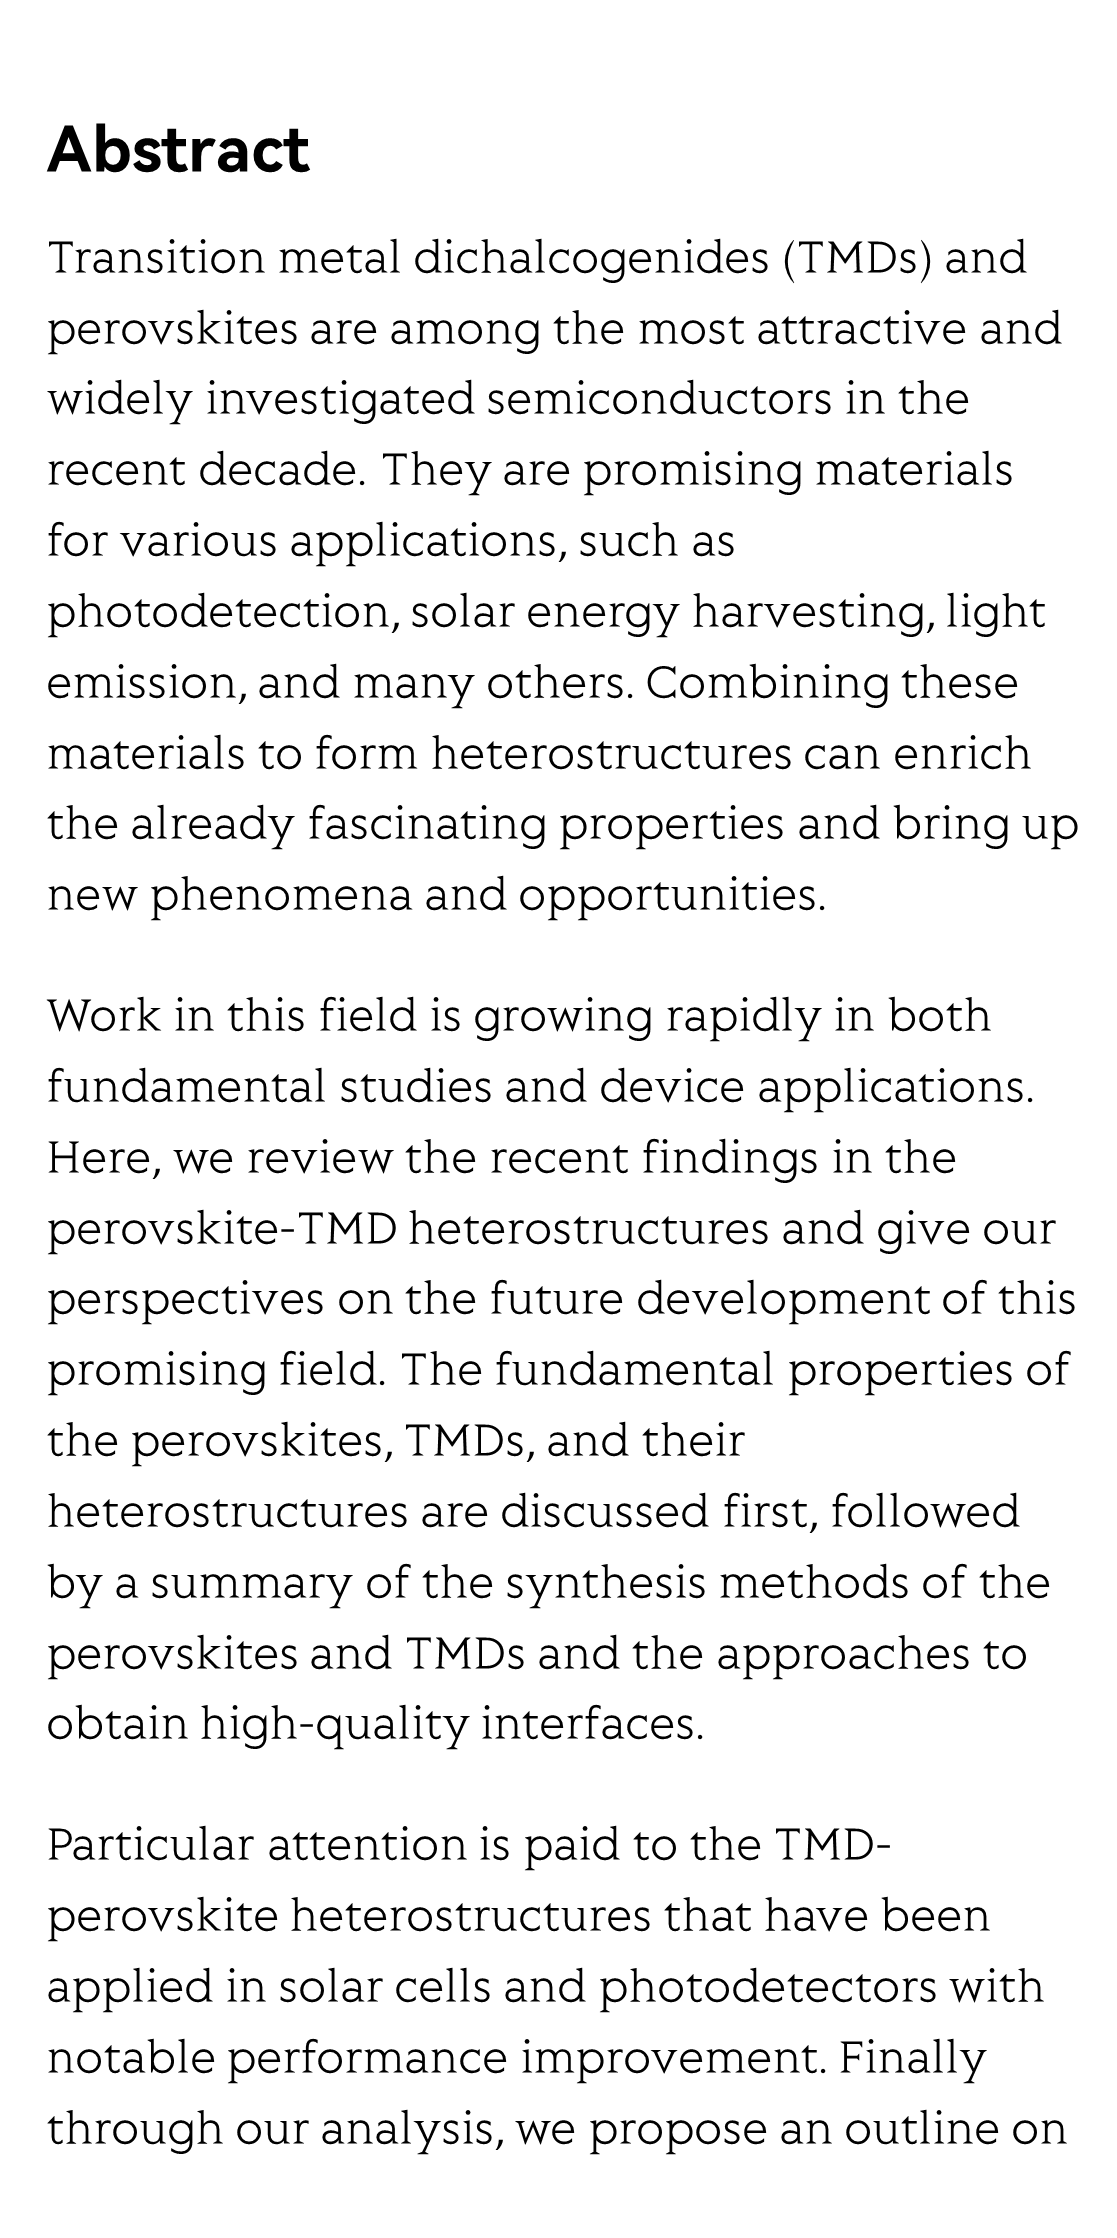 Perovskite-transition metal dichalcogenides heterostructures: recent advances and future perspectives_2